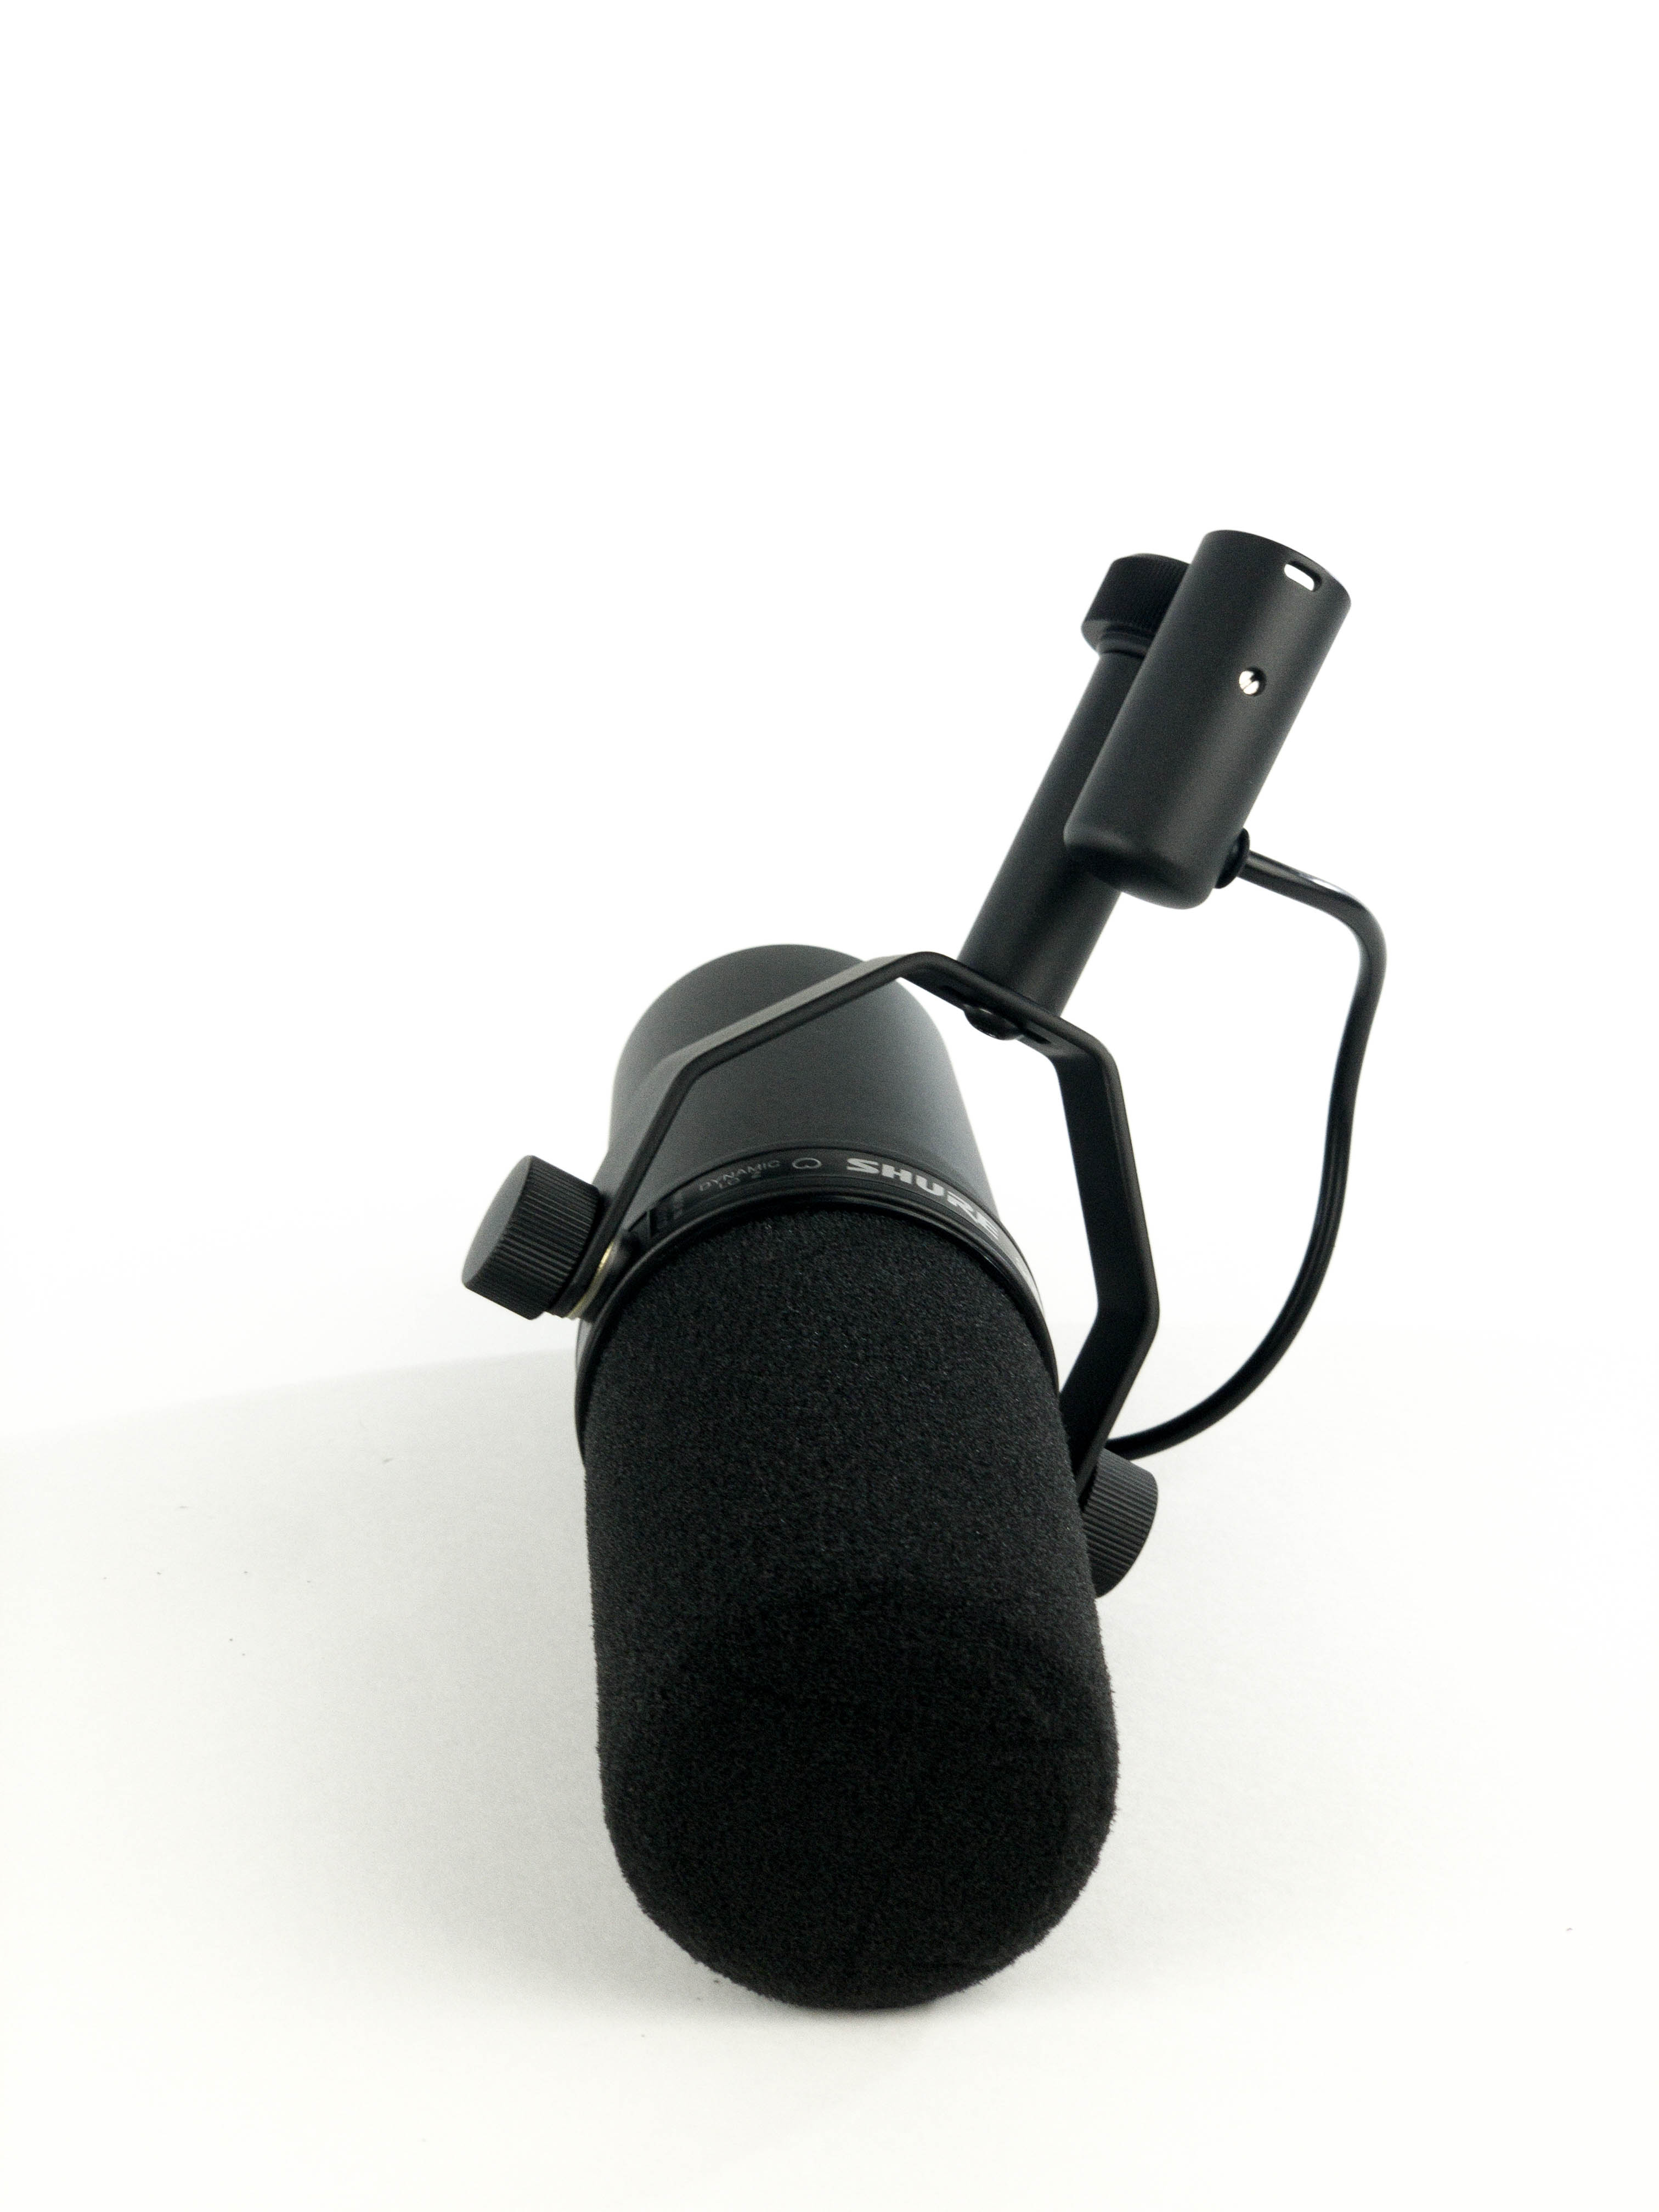 Shure SM7B mikrofon = 1 til studie broadcast